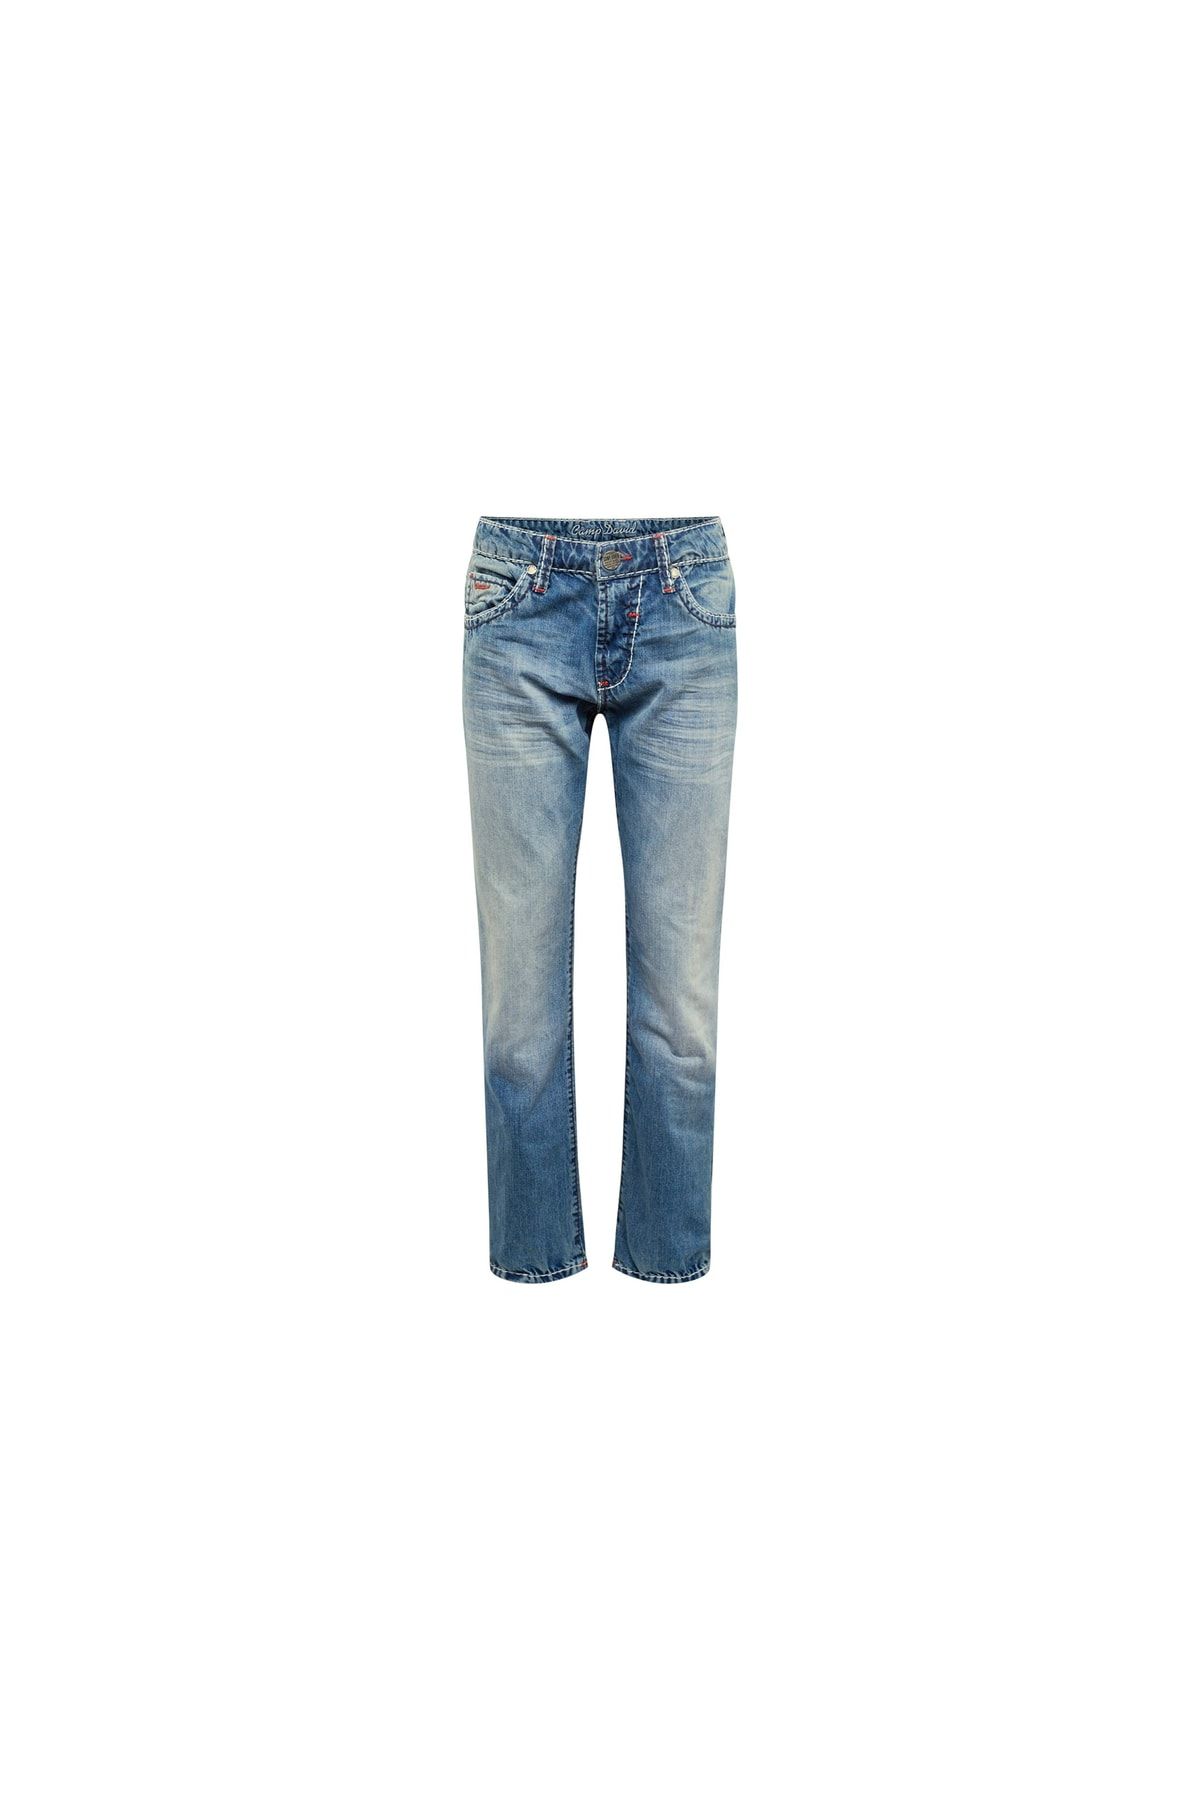 Denim–Mode | David shoppen Camp Jeans online – Stylishe Trendyol